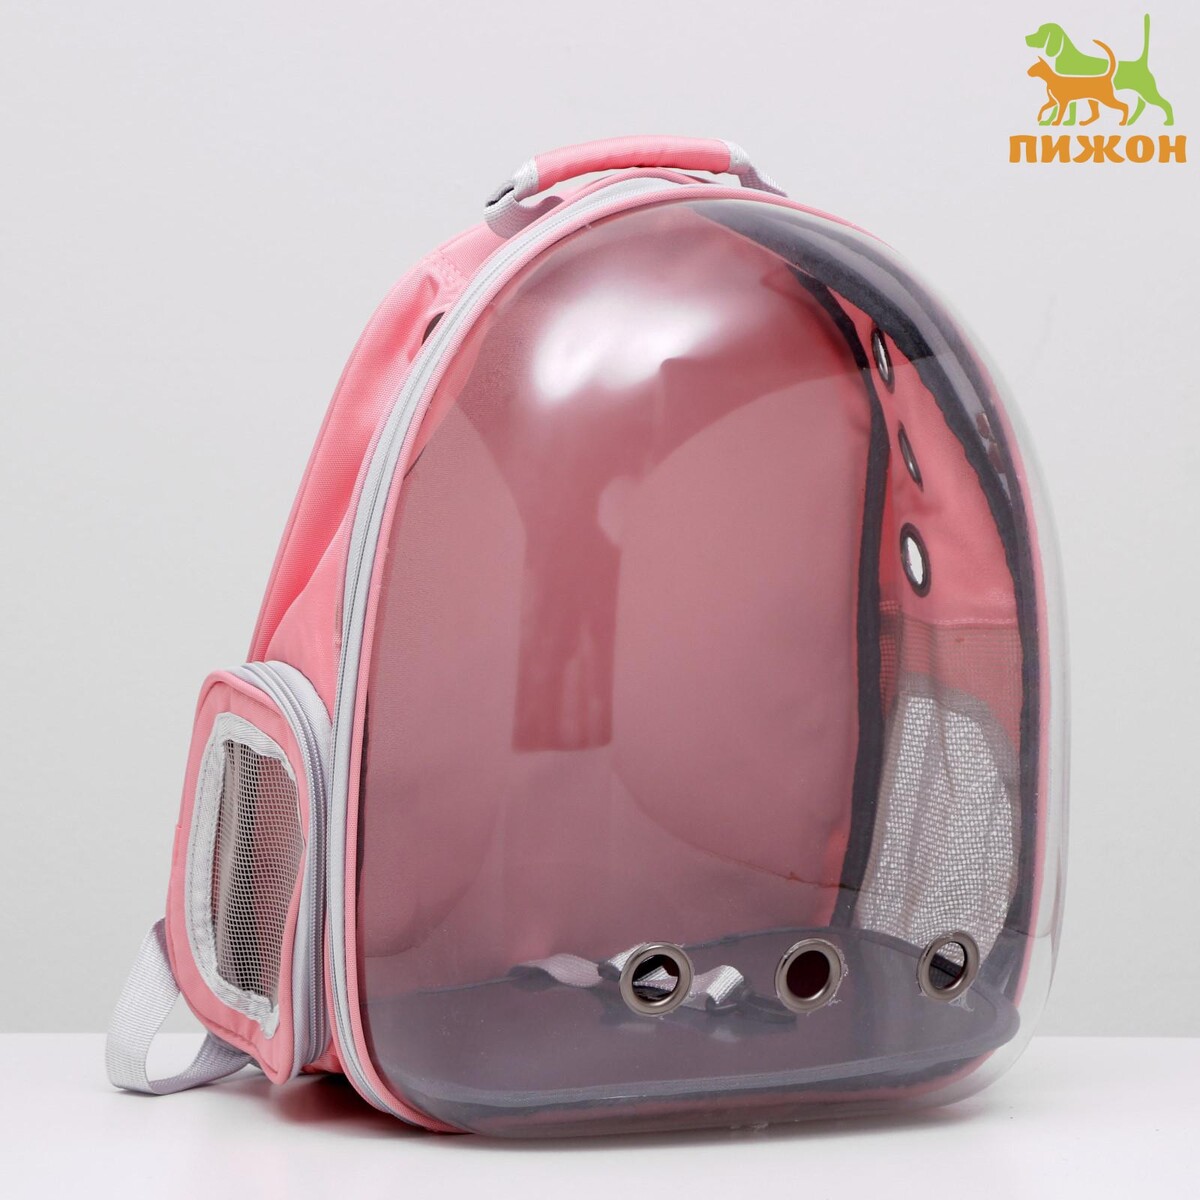 Рюкзак для переноски животных, прозрачный, 31 х 28 х 42 см, розовый рюкзак для переноски животных 31 5 х 25 х 33 см голубой